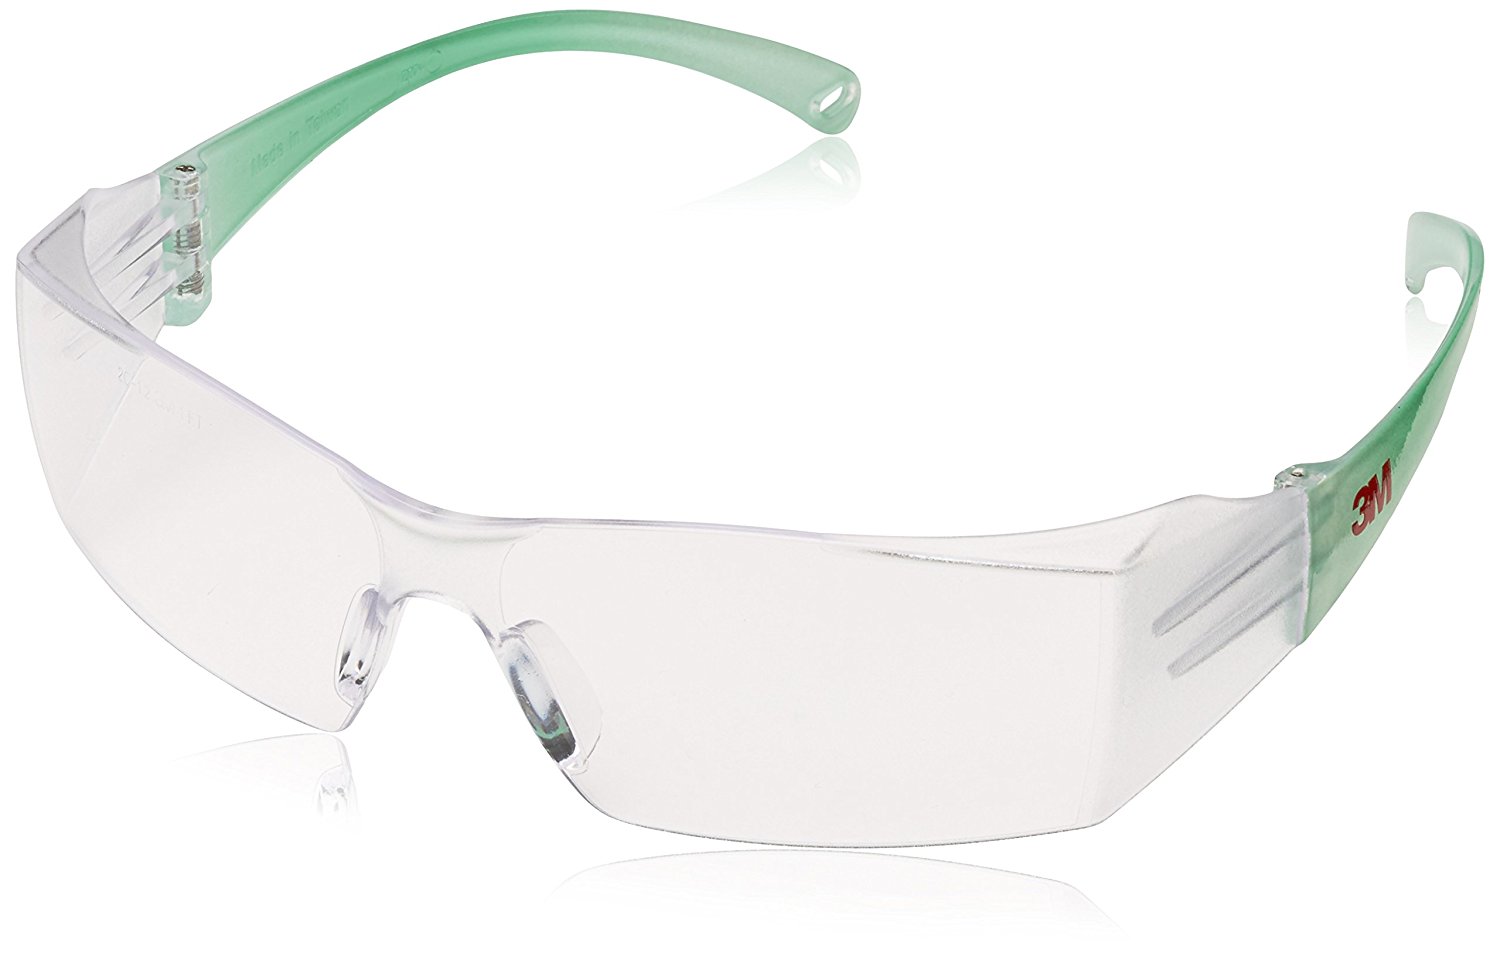 3m Lightweight Safety Glasses